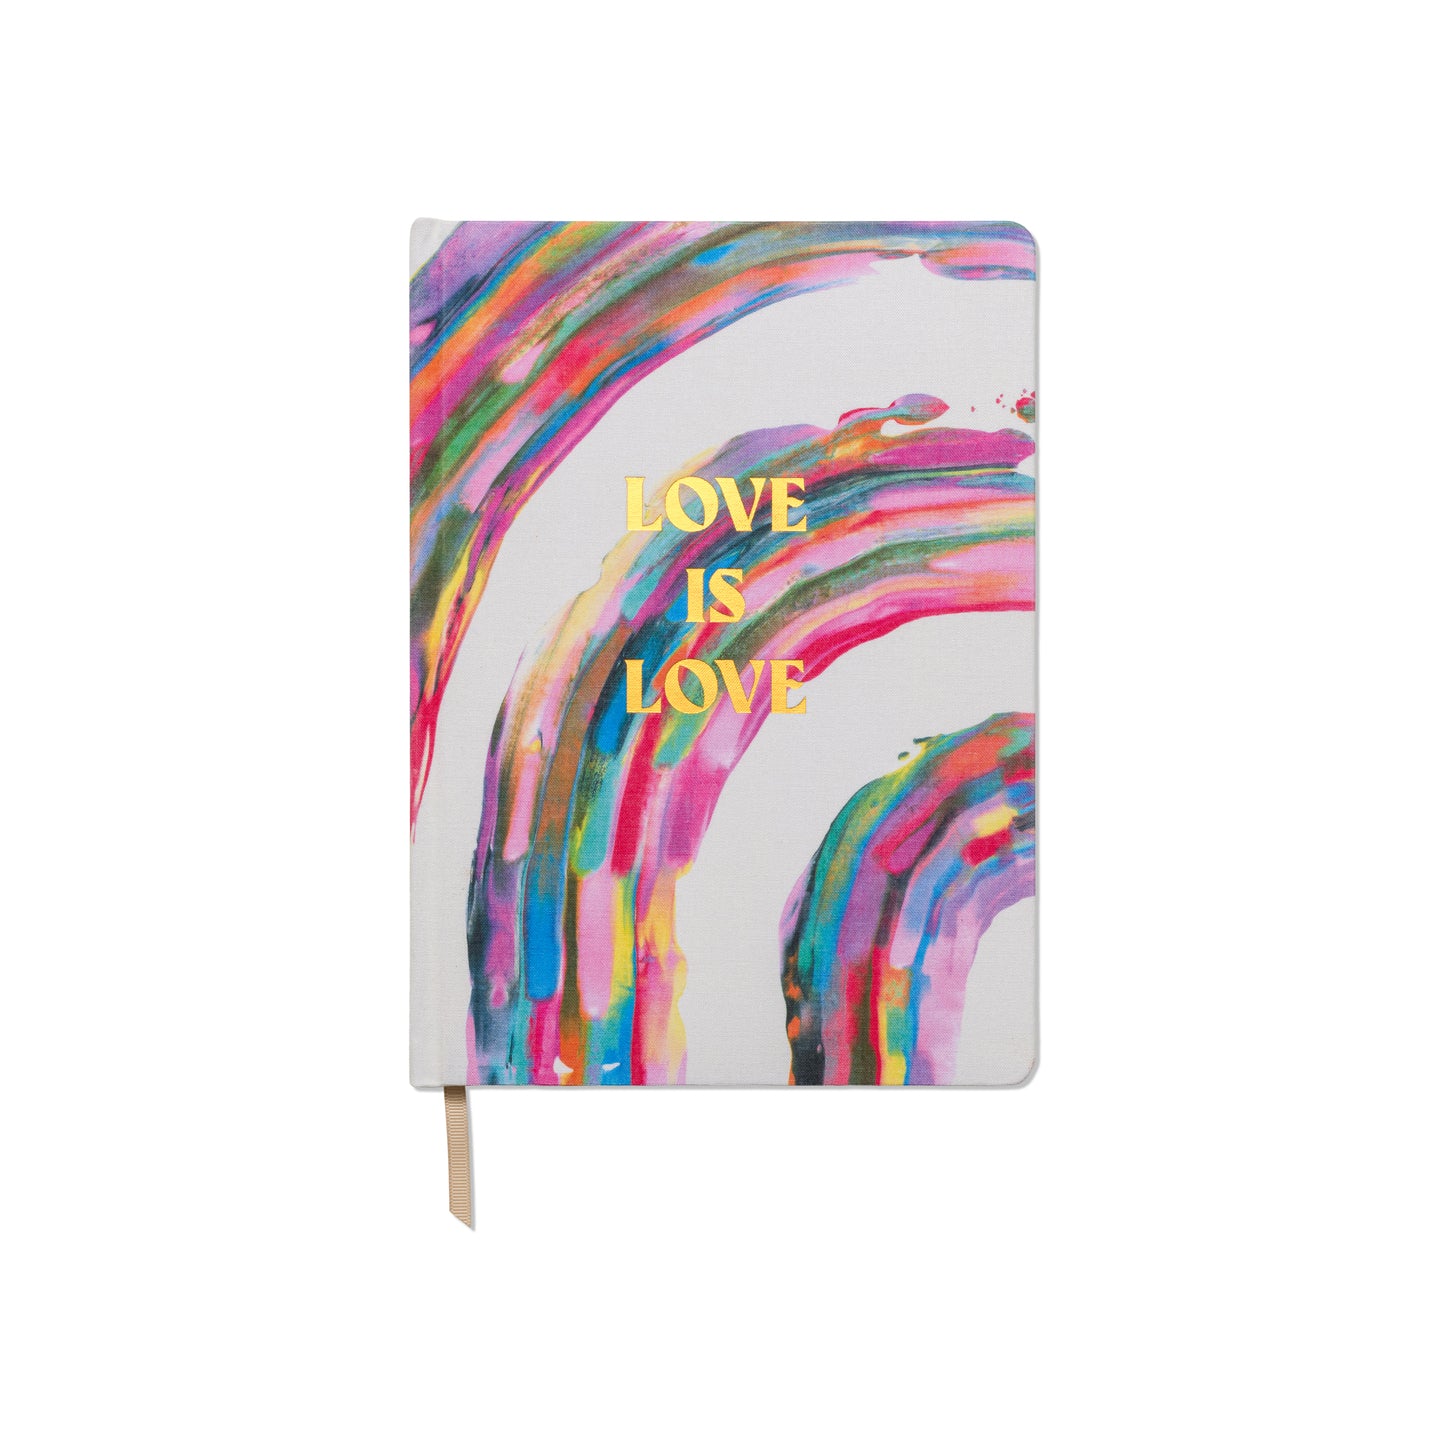 Jumbo Cloth Covered Journal - Love is Love